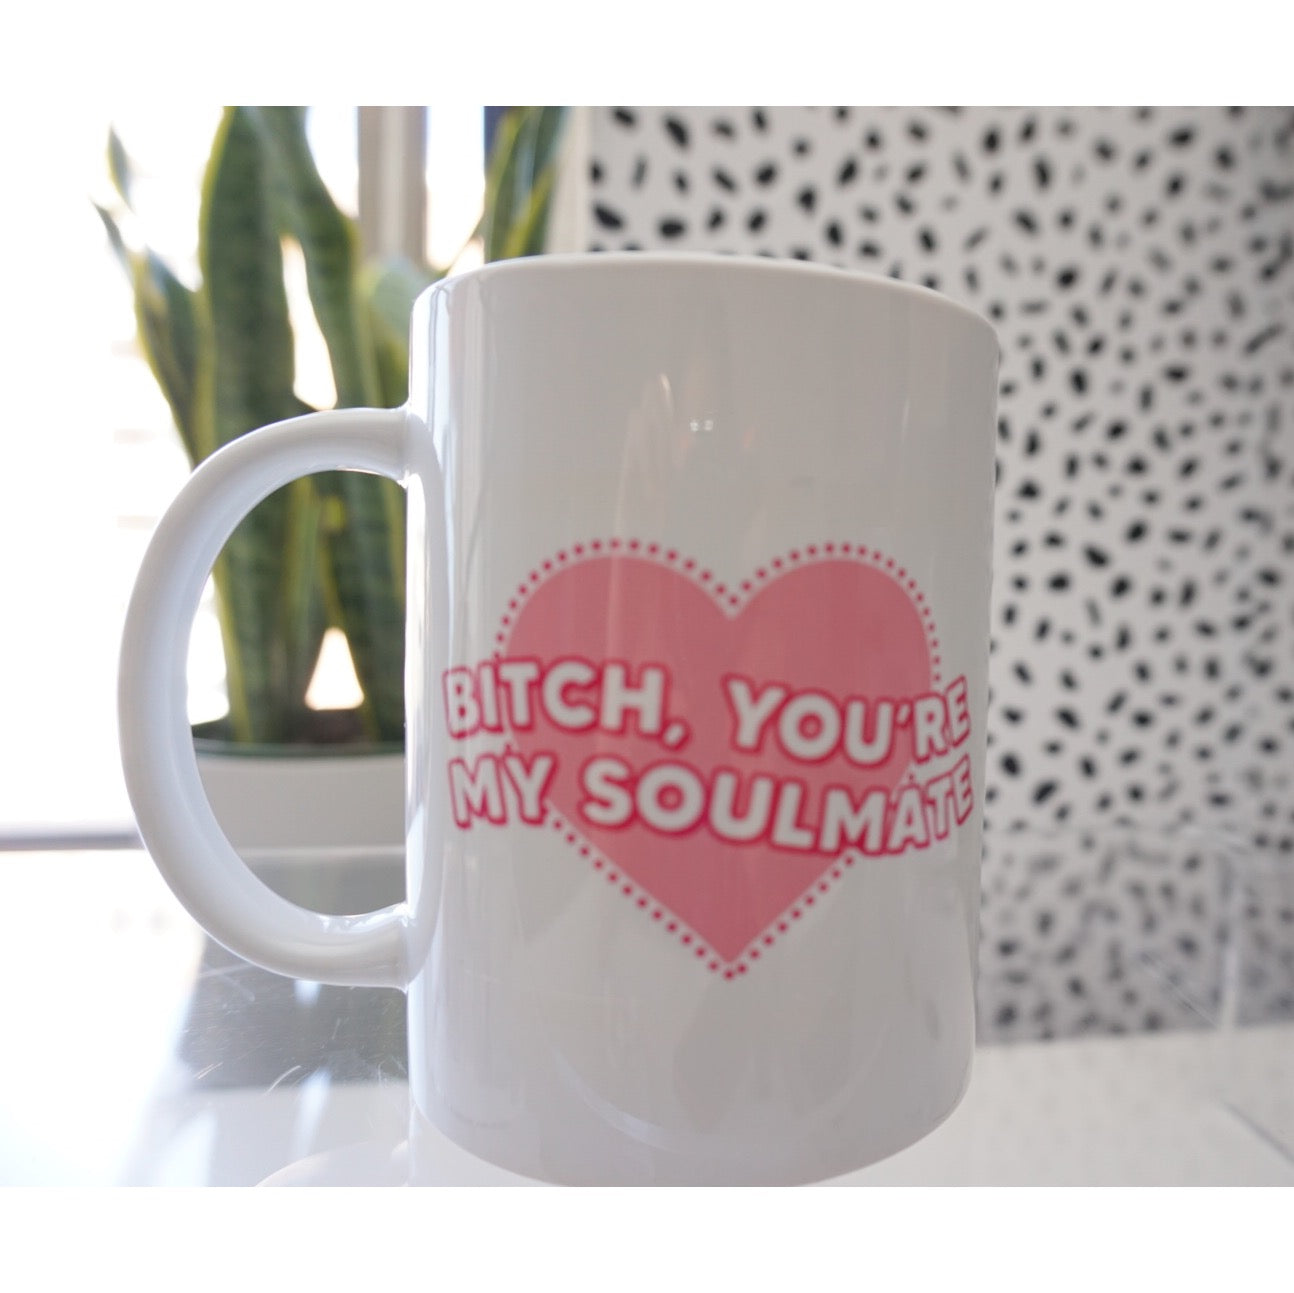 Bitch you’re my soulmate mug